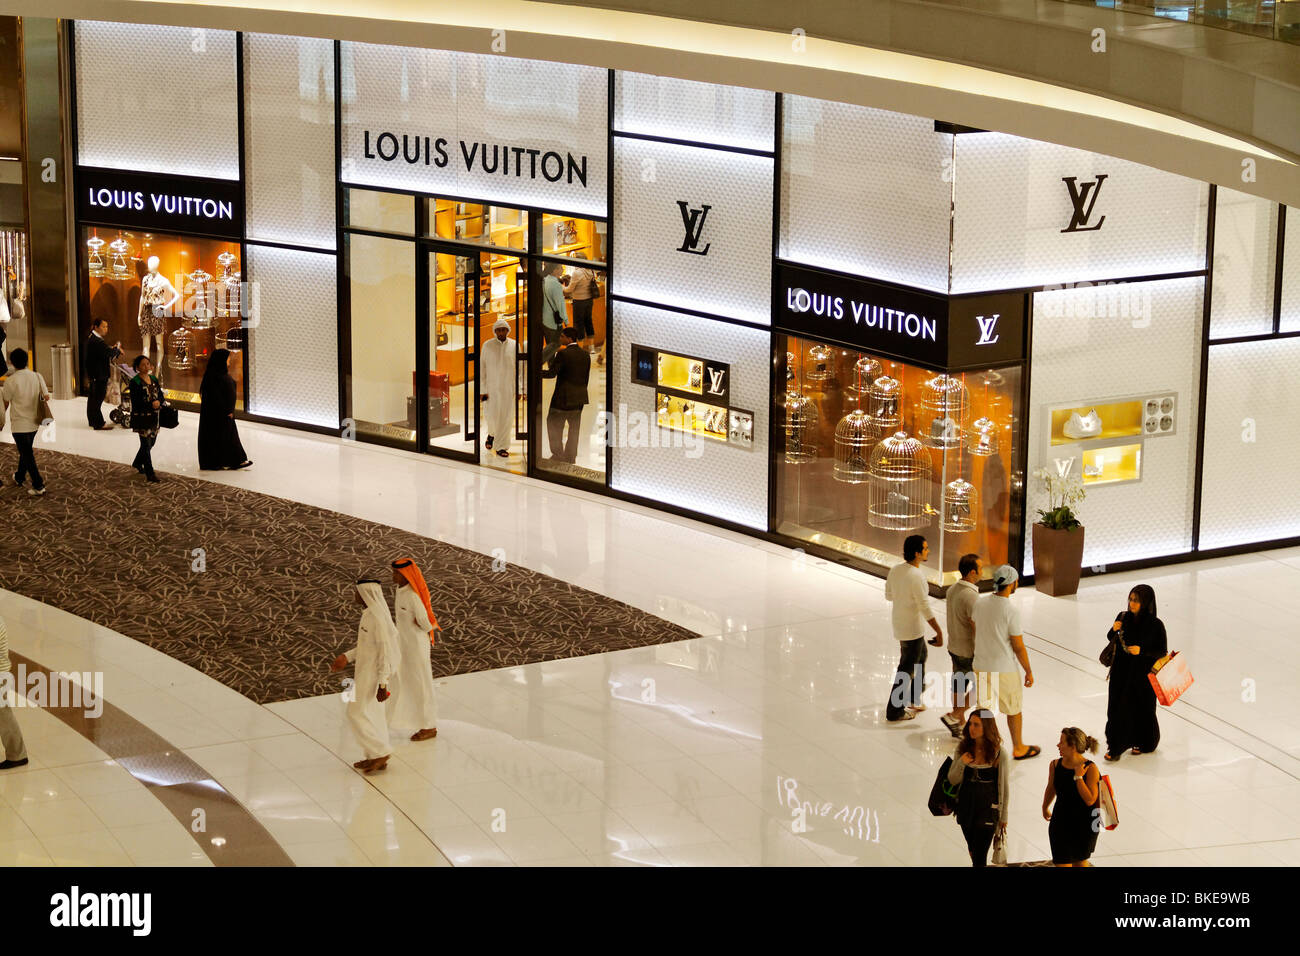 Dubai Shopping Mall Louis Vuitton Shop United Arab Emirates City Stock Photo - Alamy